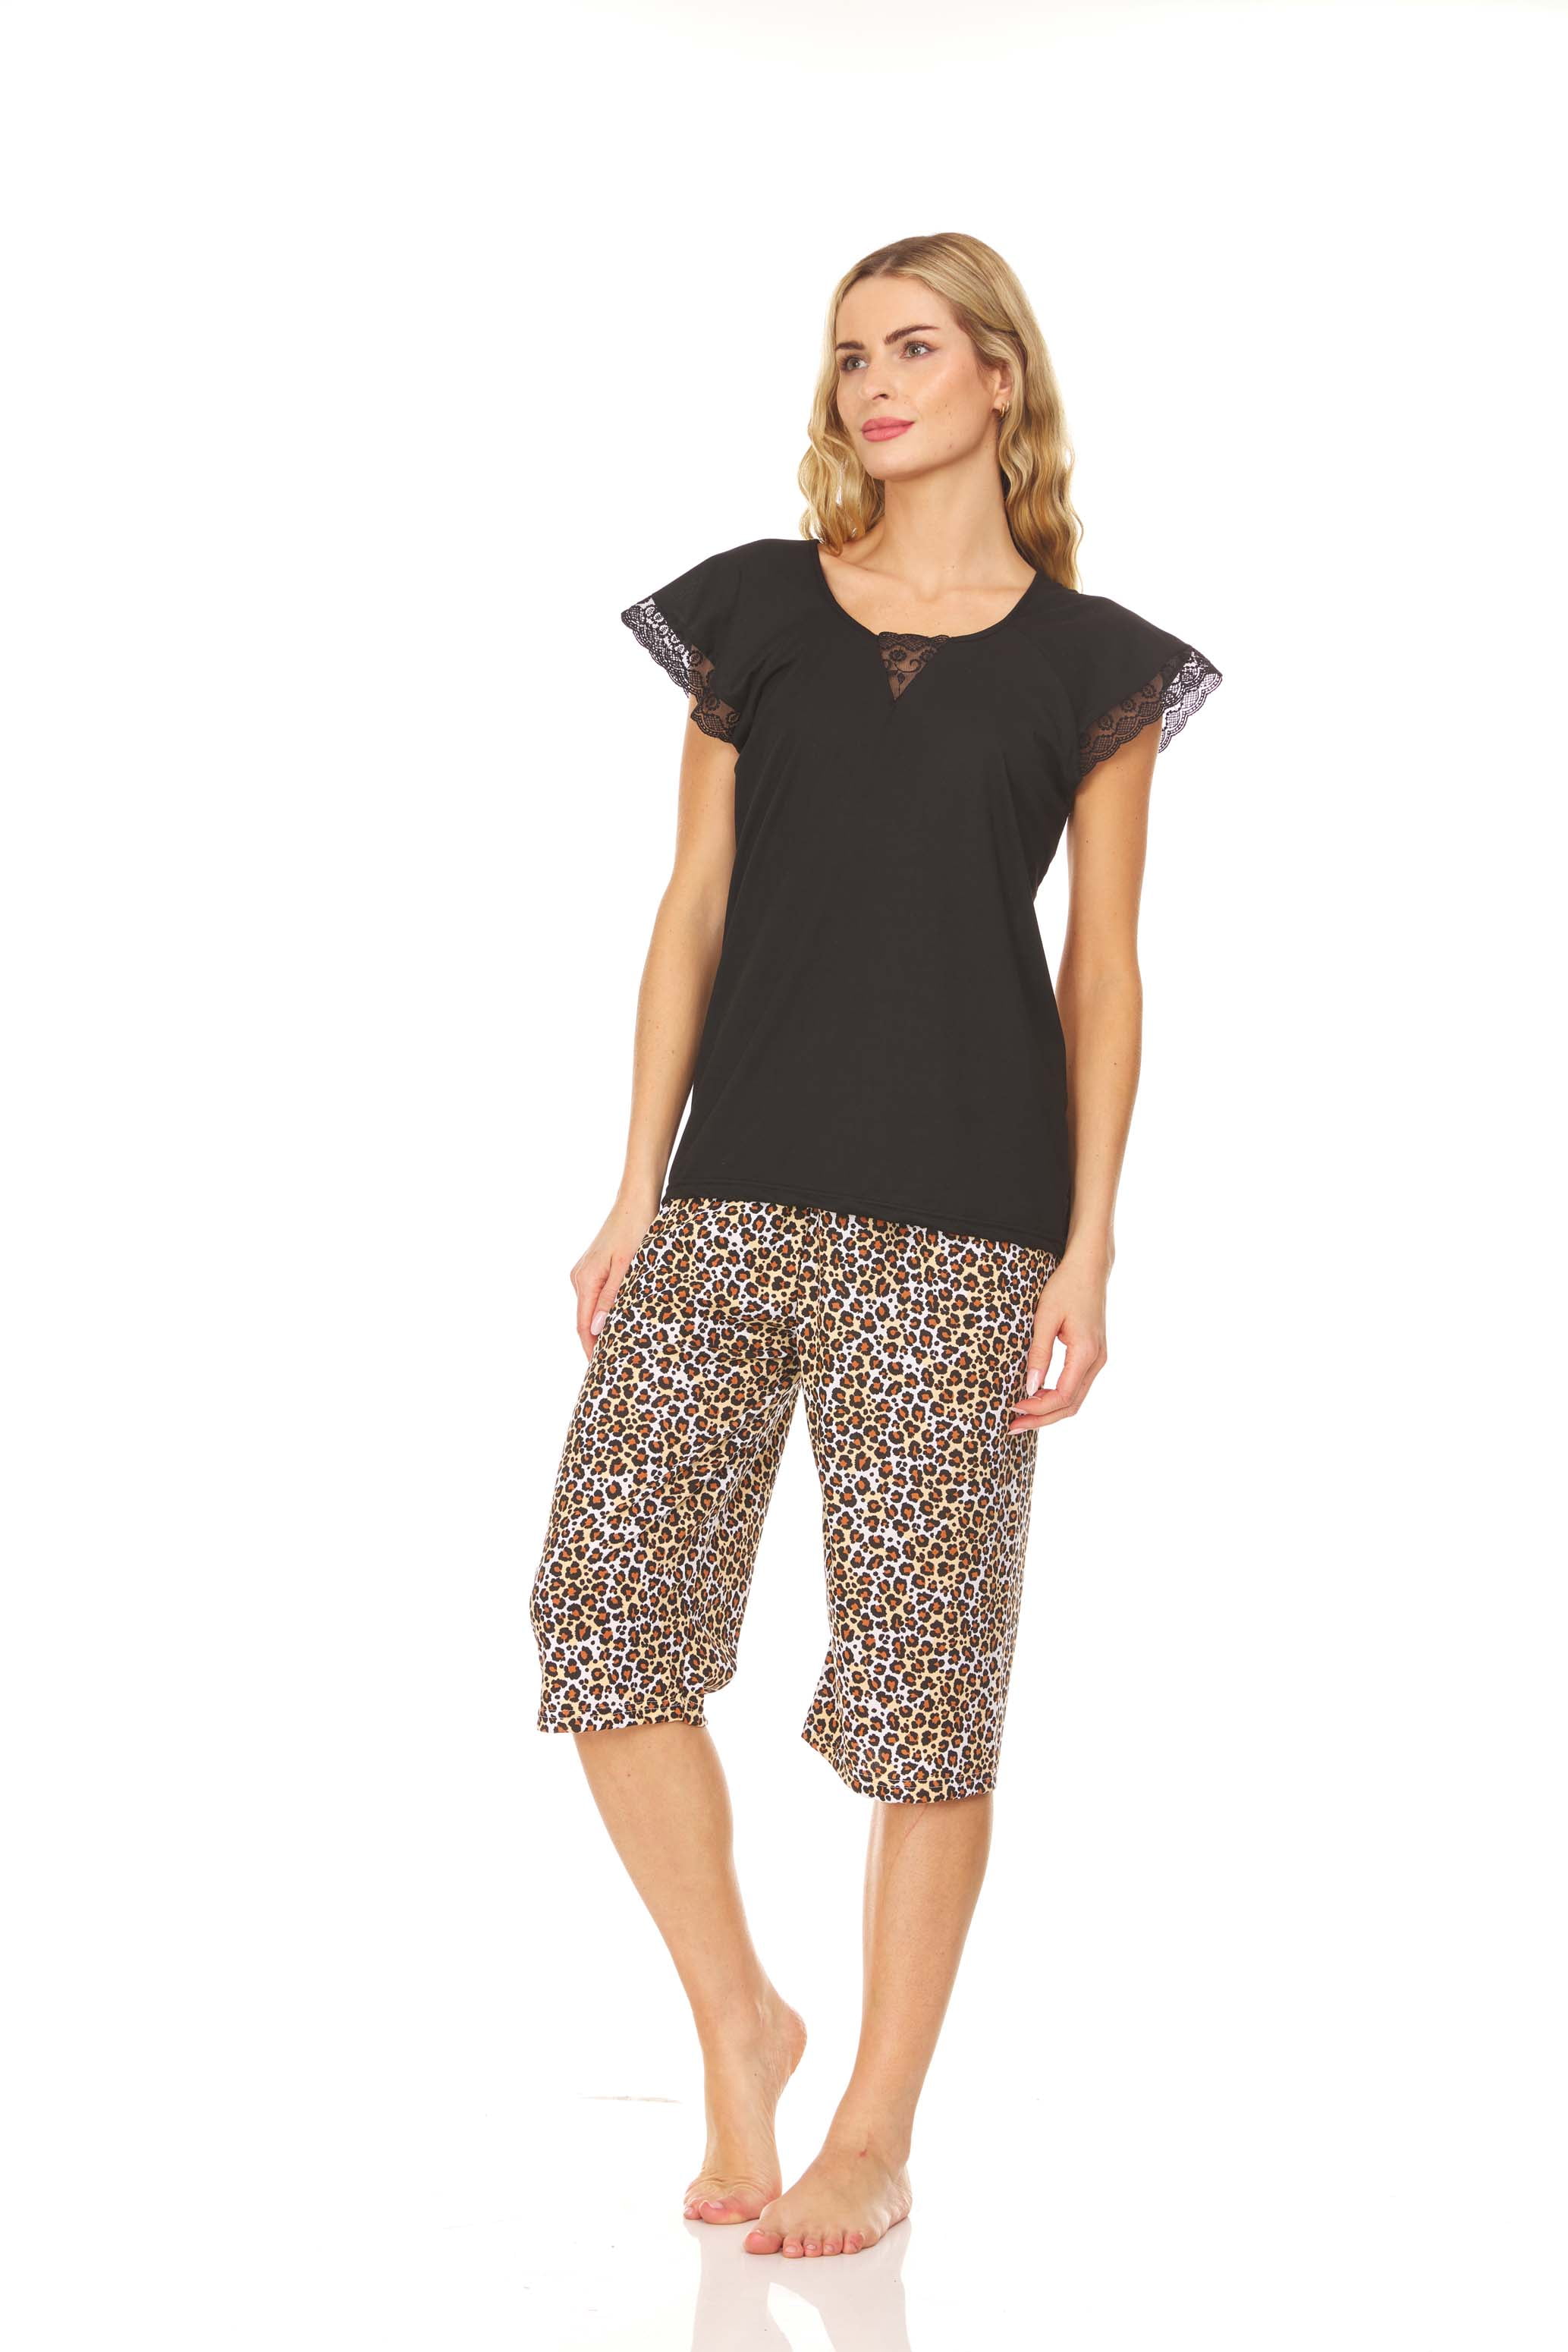 Lati Fashion Women Capri and Short Sleeve Top 2-Piece Female Pajamas Set  Black L 